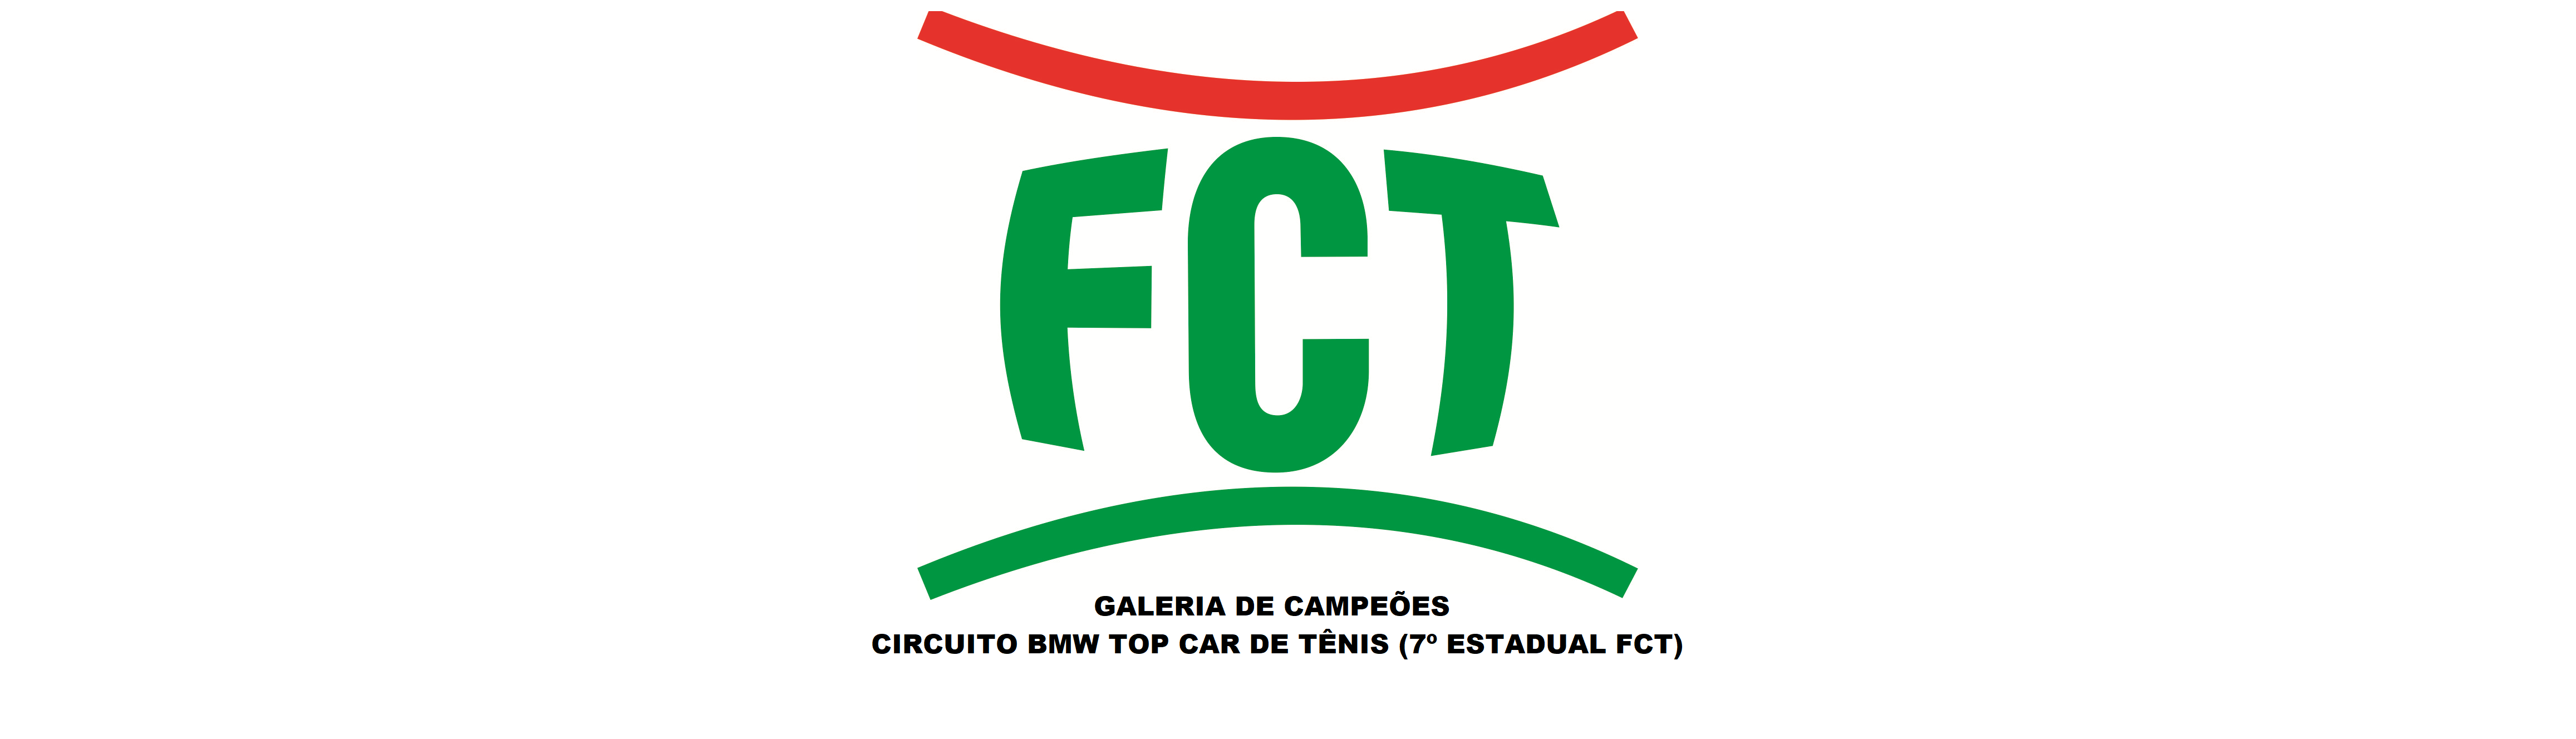 GALERIA DE CAMPEÕES - CIRCUITO BMW TOP CAR DE TÊNIS (7º ESTADUAL FCT)